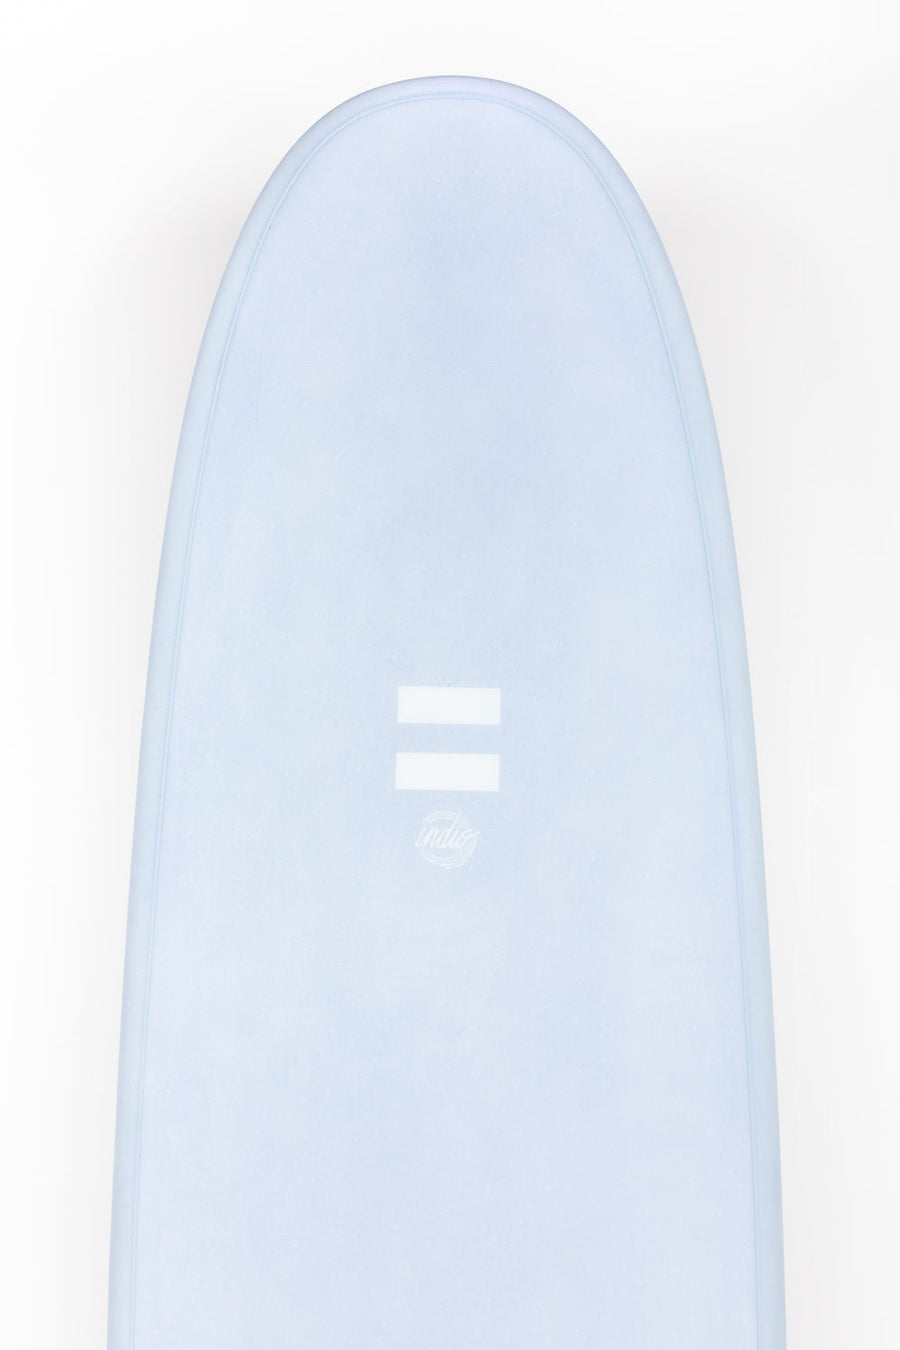 Indio Surfboards  MID LENGTH Light Blue 7´6